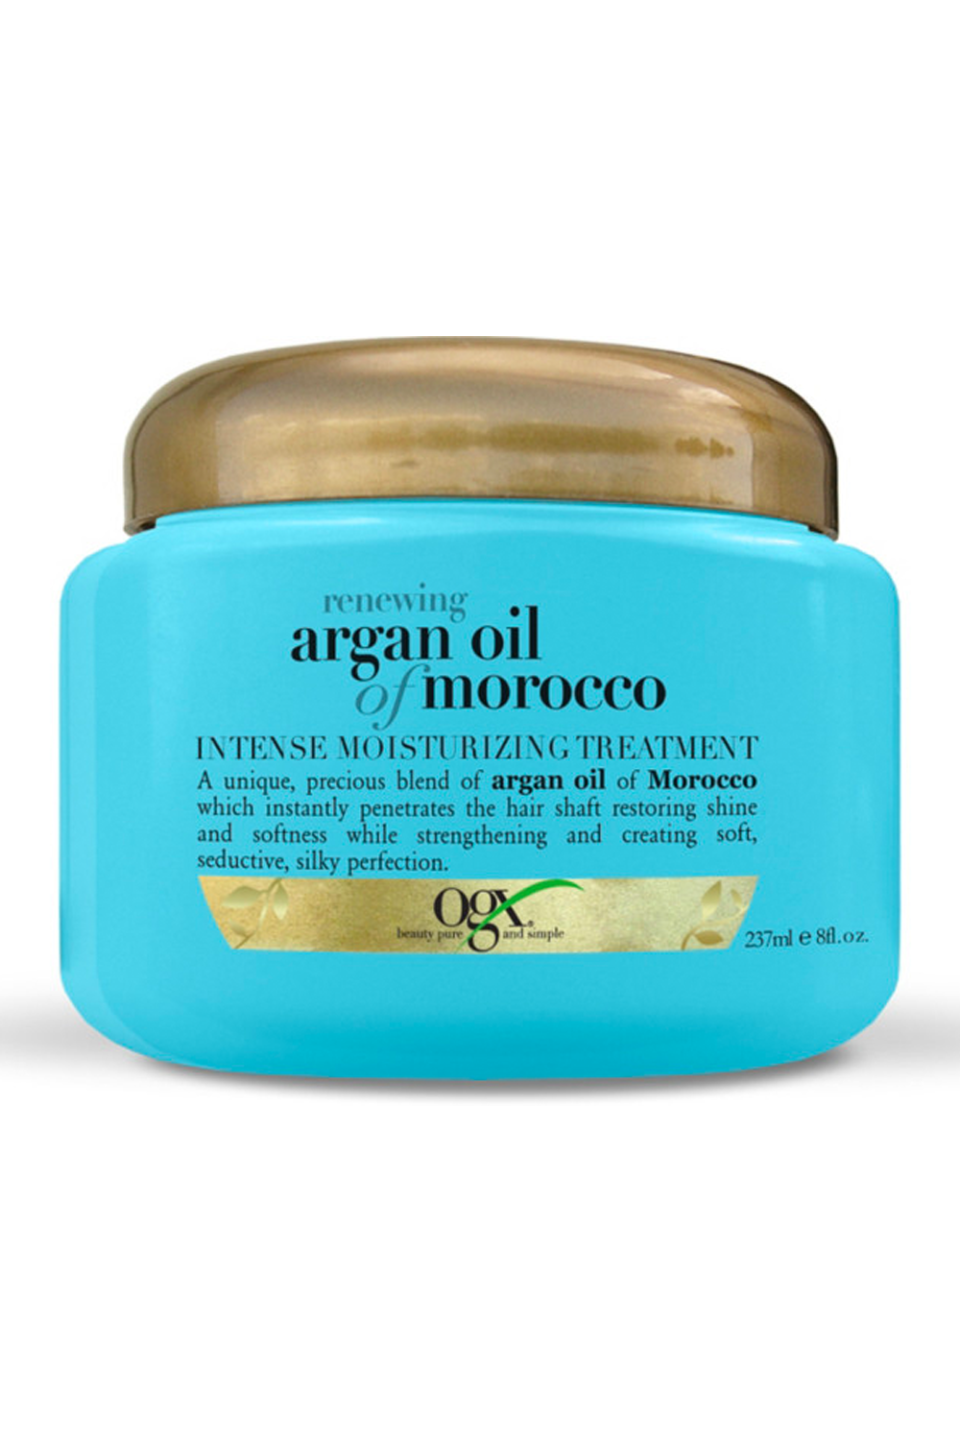 6) OGX Renewing Argan Oil Of Morocco Intense Moisturizing Treatment